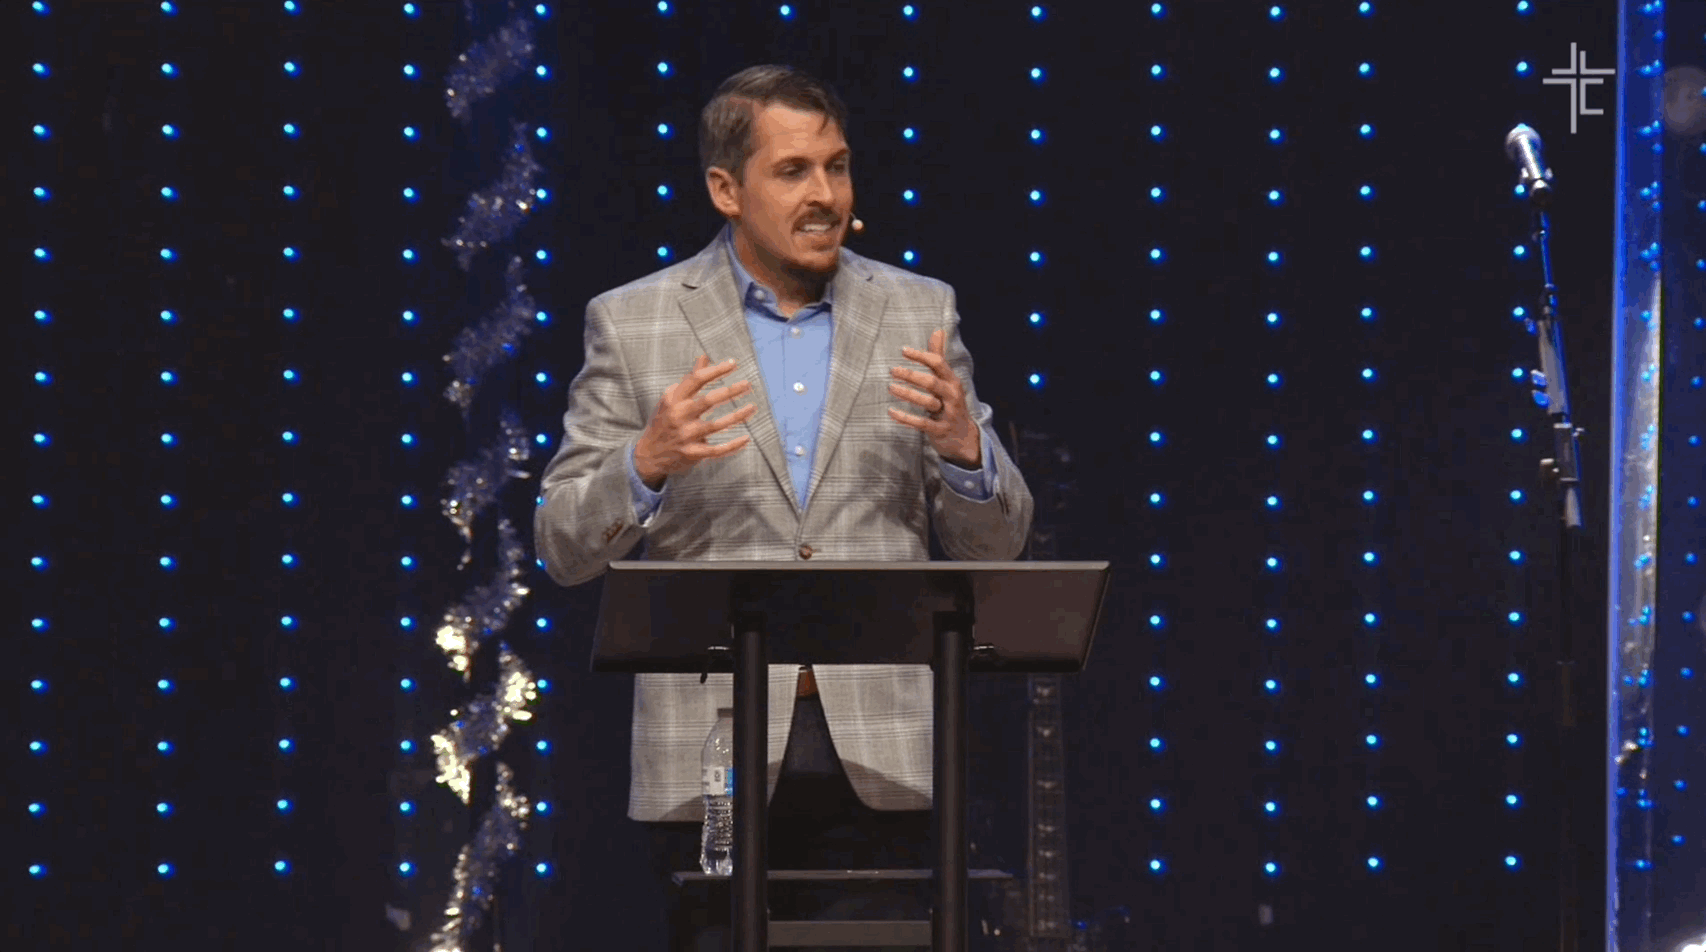 Main camera shot of pastor speaking on stage